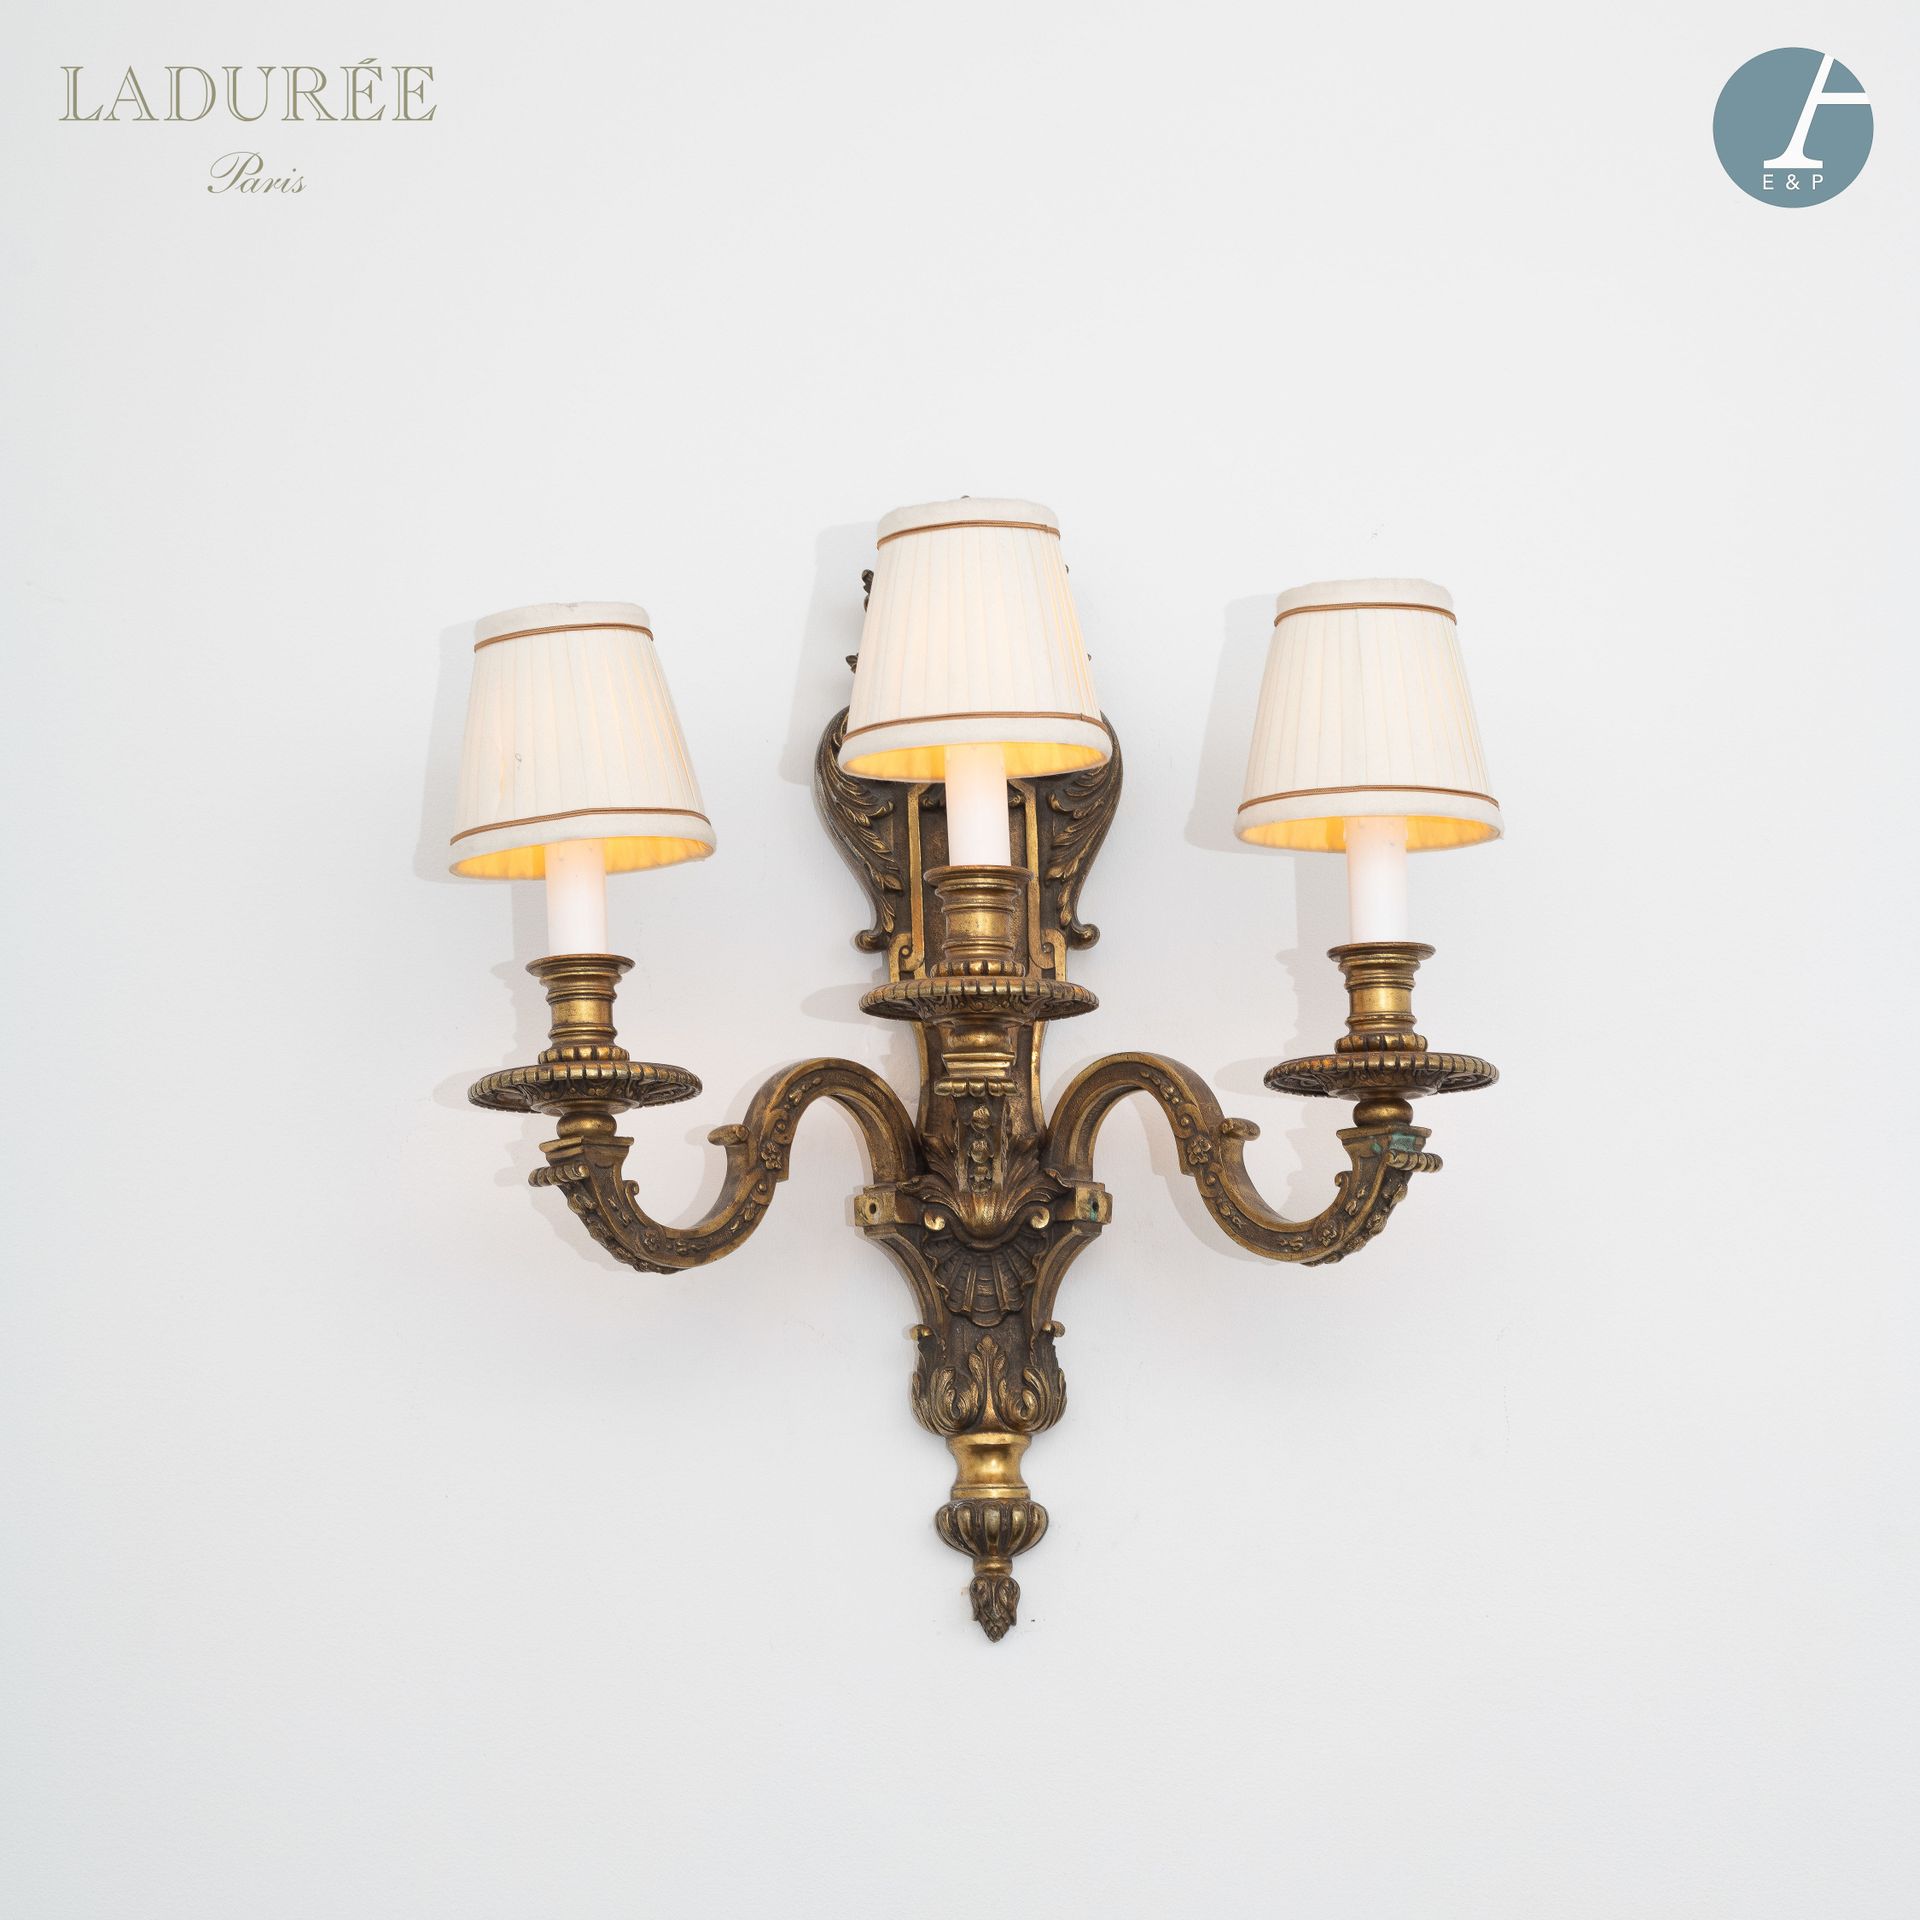 Null 来自Ladurée之家--办公室。

青铜壁灯，有三个带凹槽和镀金的青铜灯臂，装饰有刺桐叶和棕榈树。

摄政风格。

高：30厘米（约）。

使用条件&hellip;